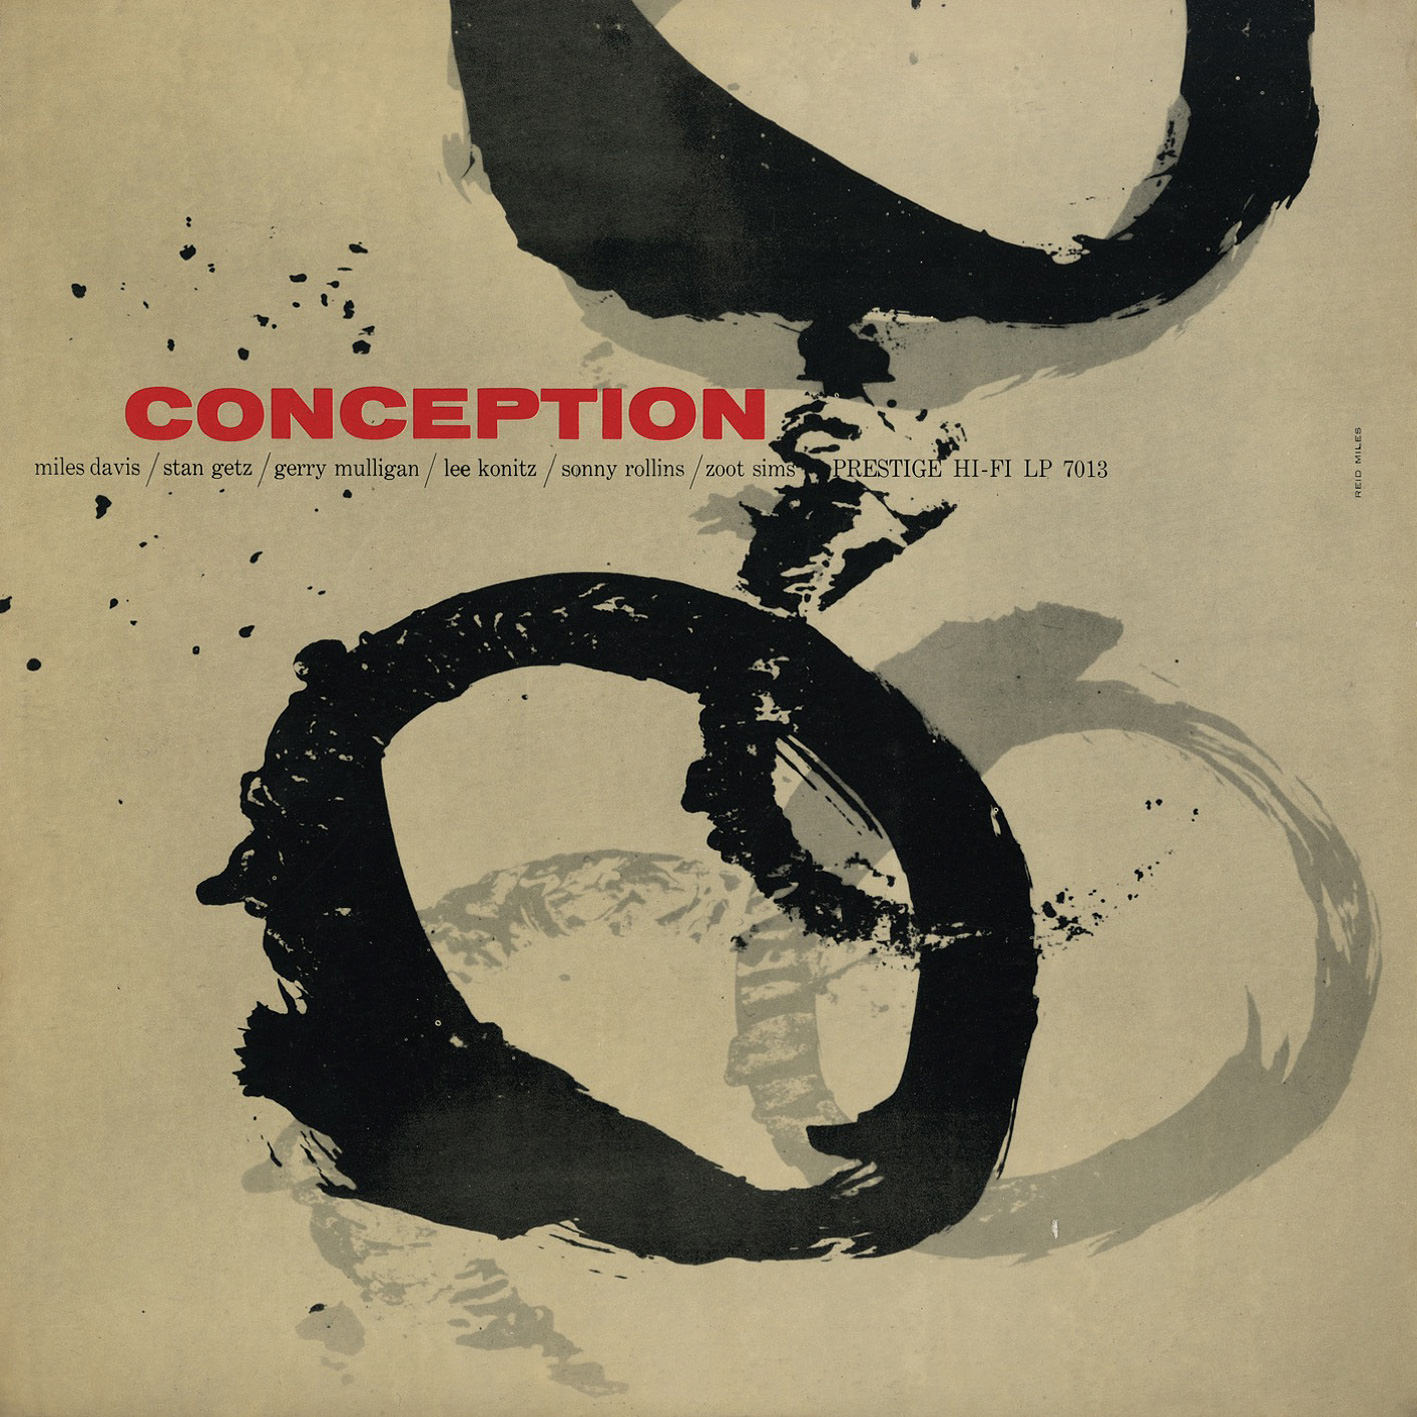 VA - Conception (1956/2016) [HDTracks FLAC 24bit/192kHz]